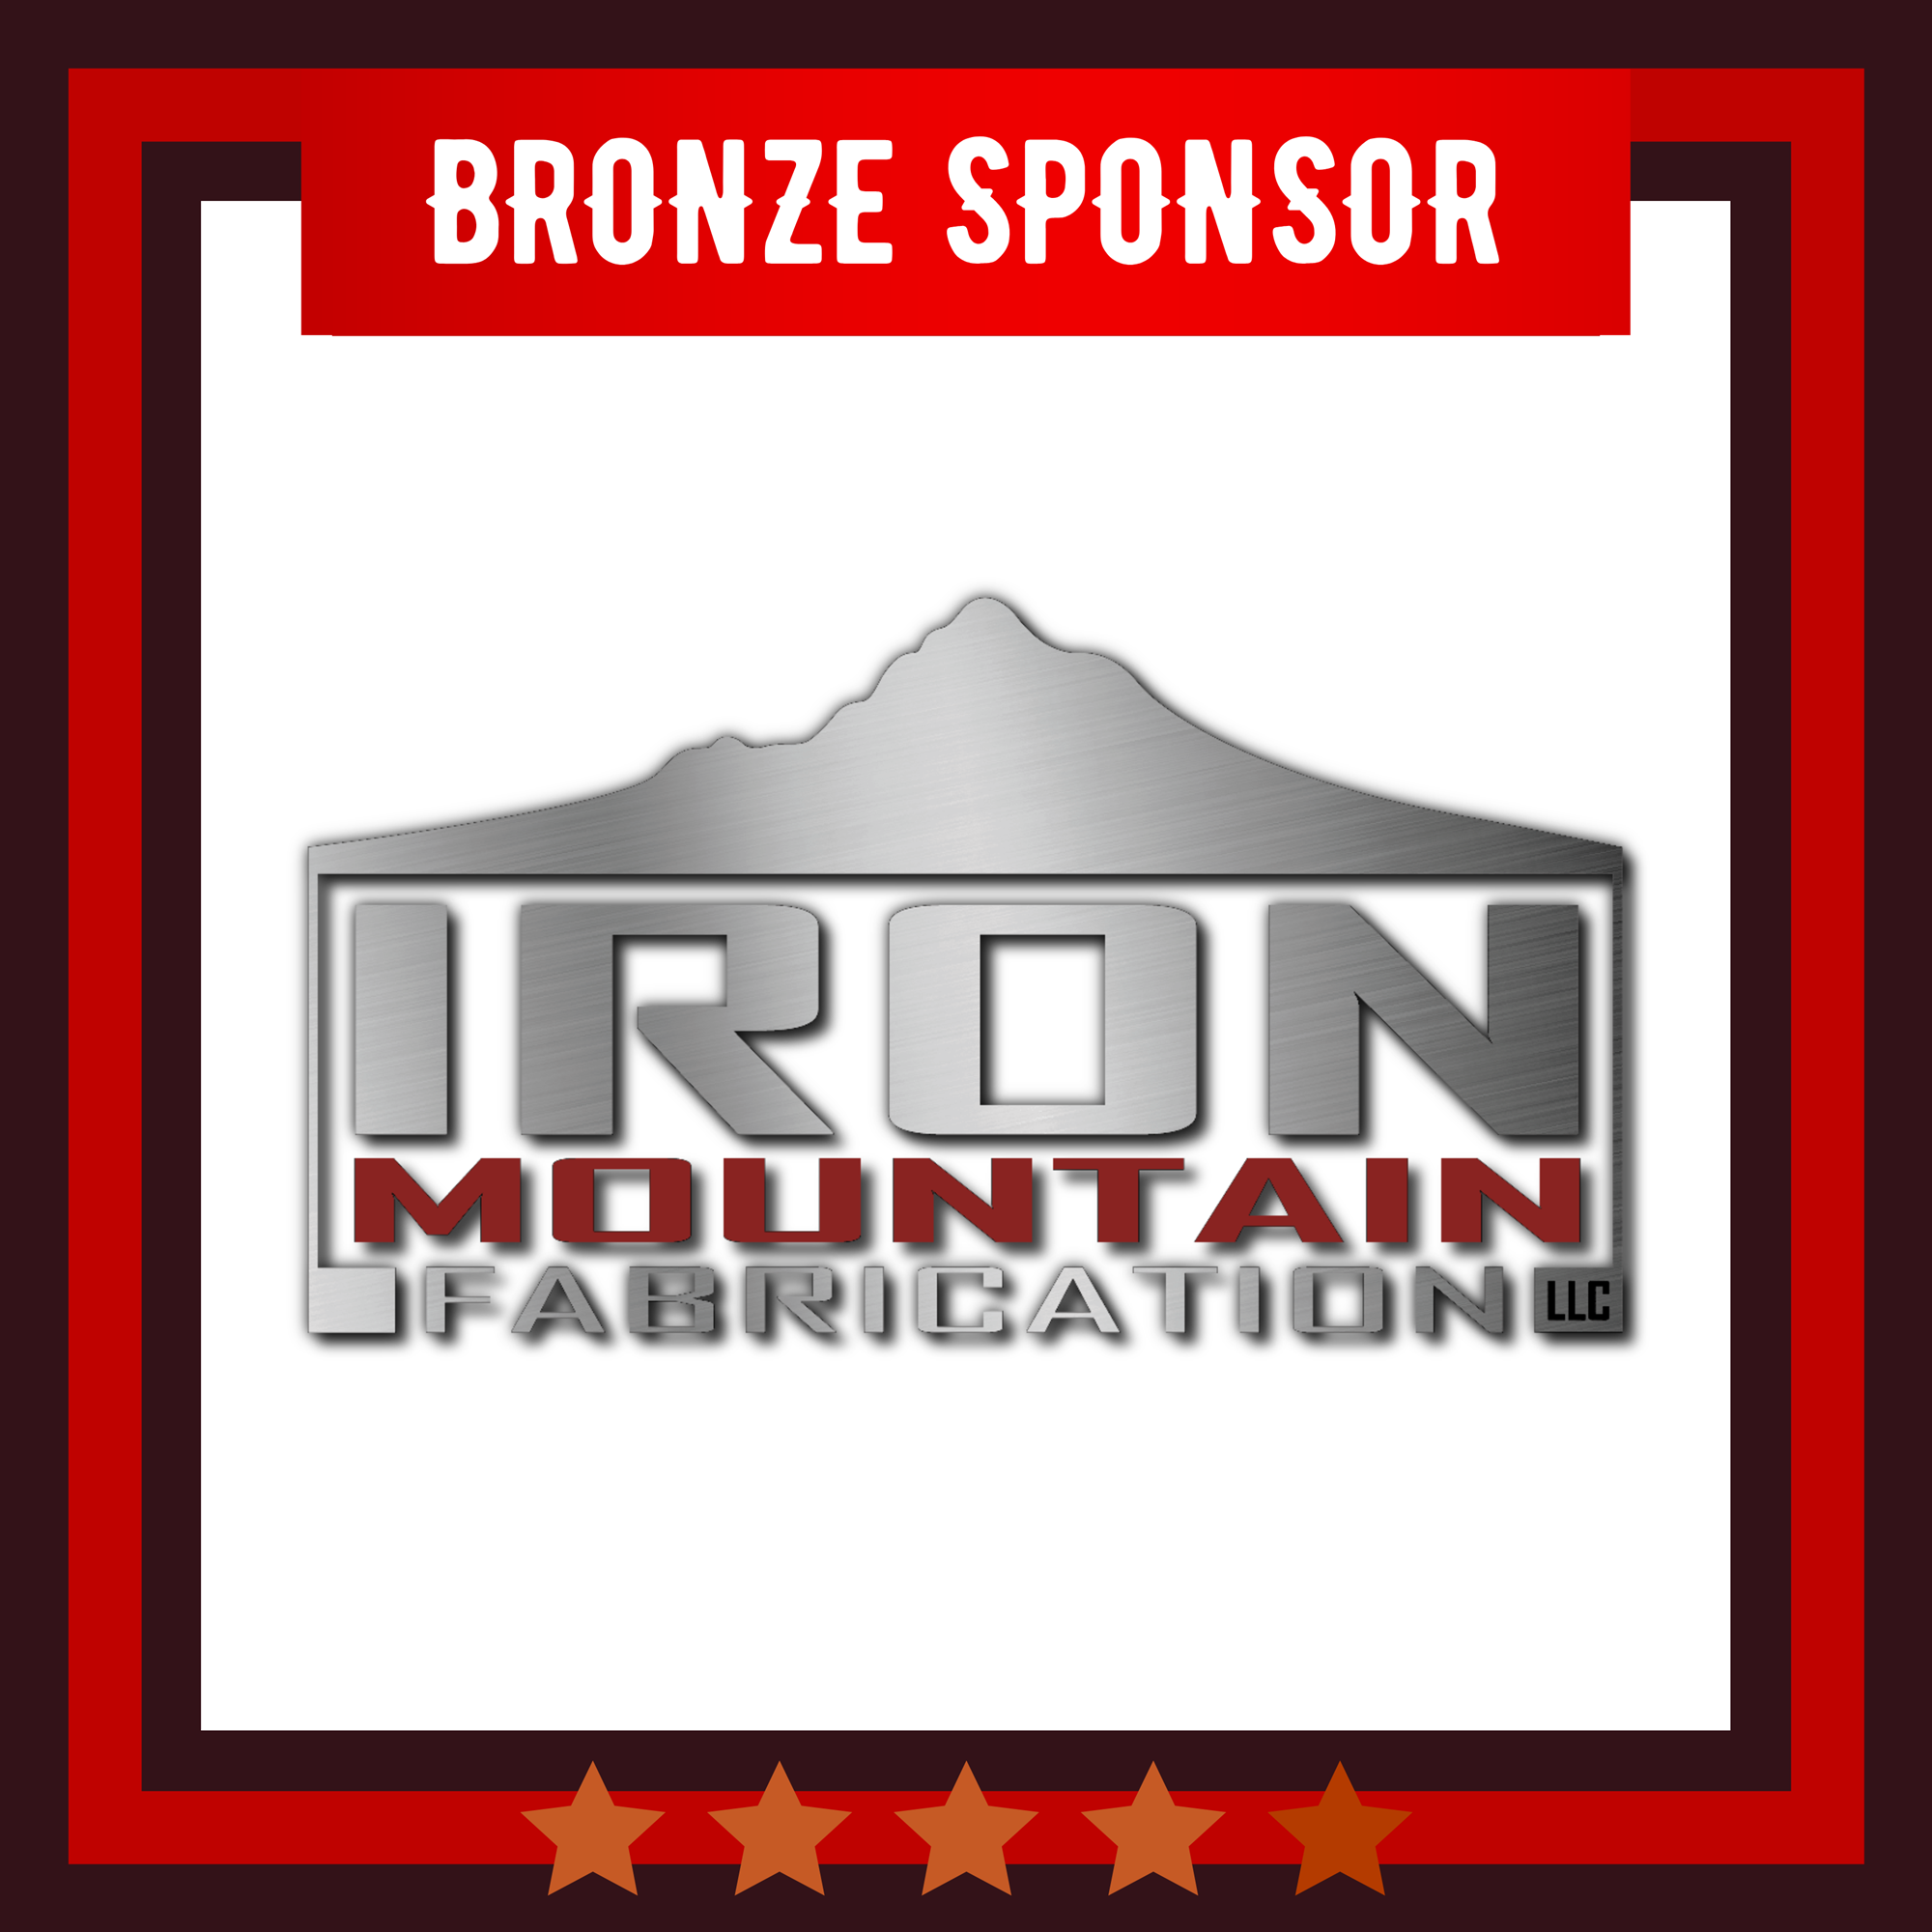 Bronze Sponsor: Iron Mountain Fabrication, LLC